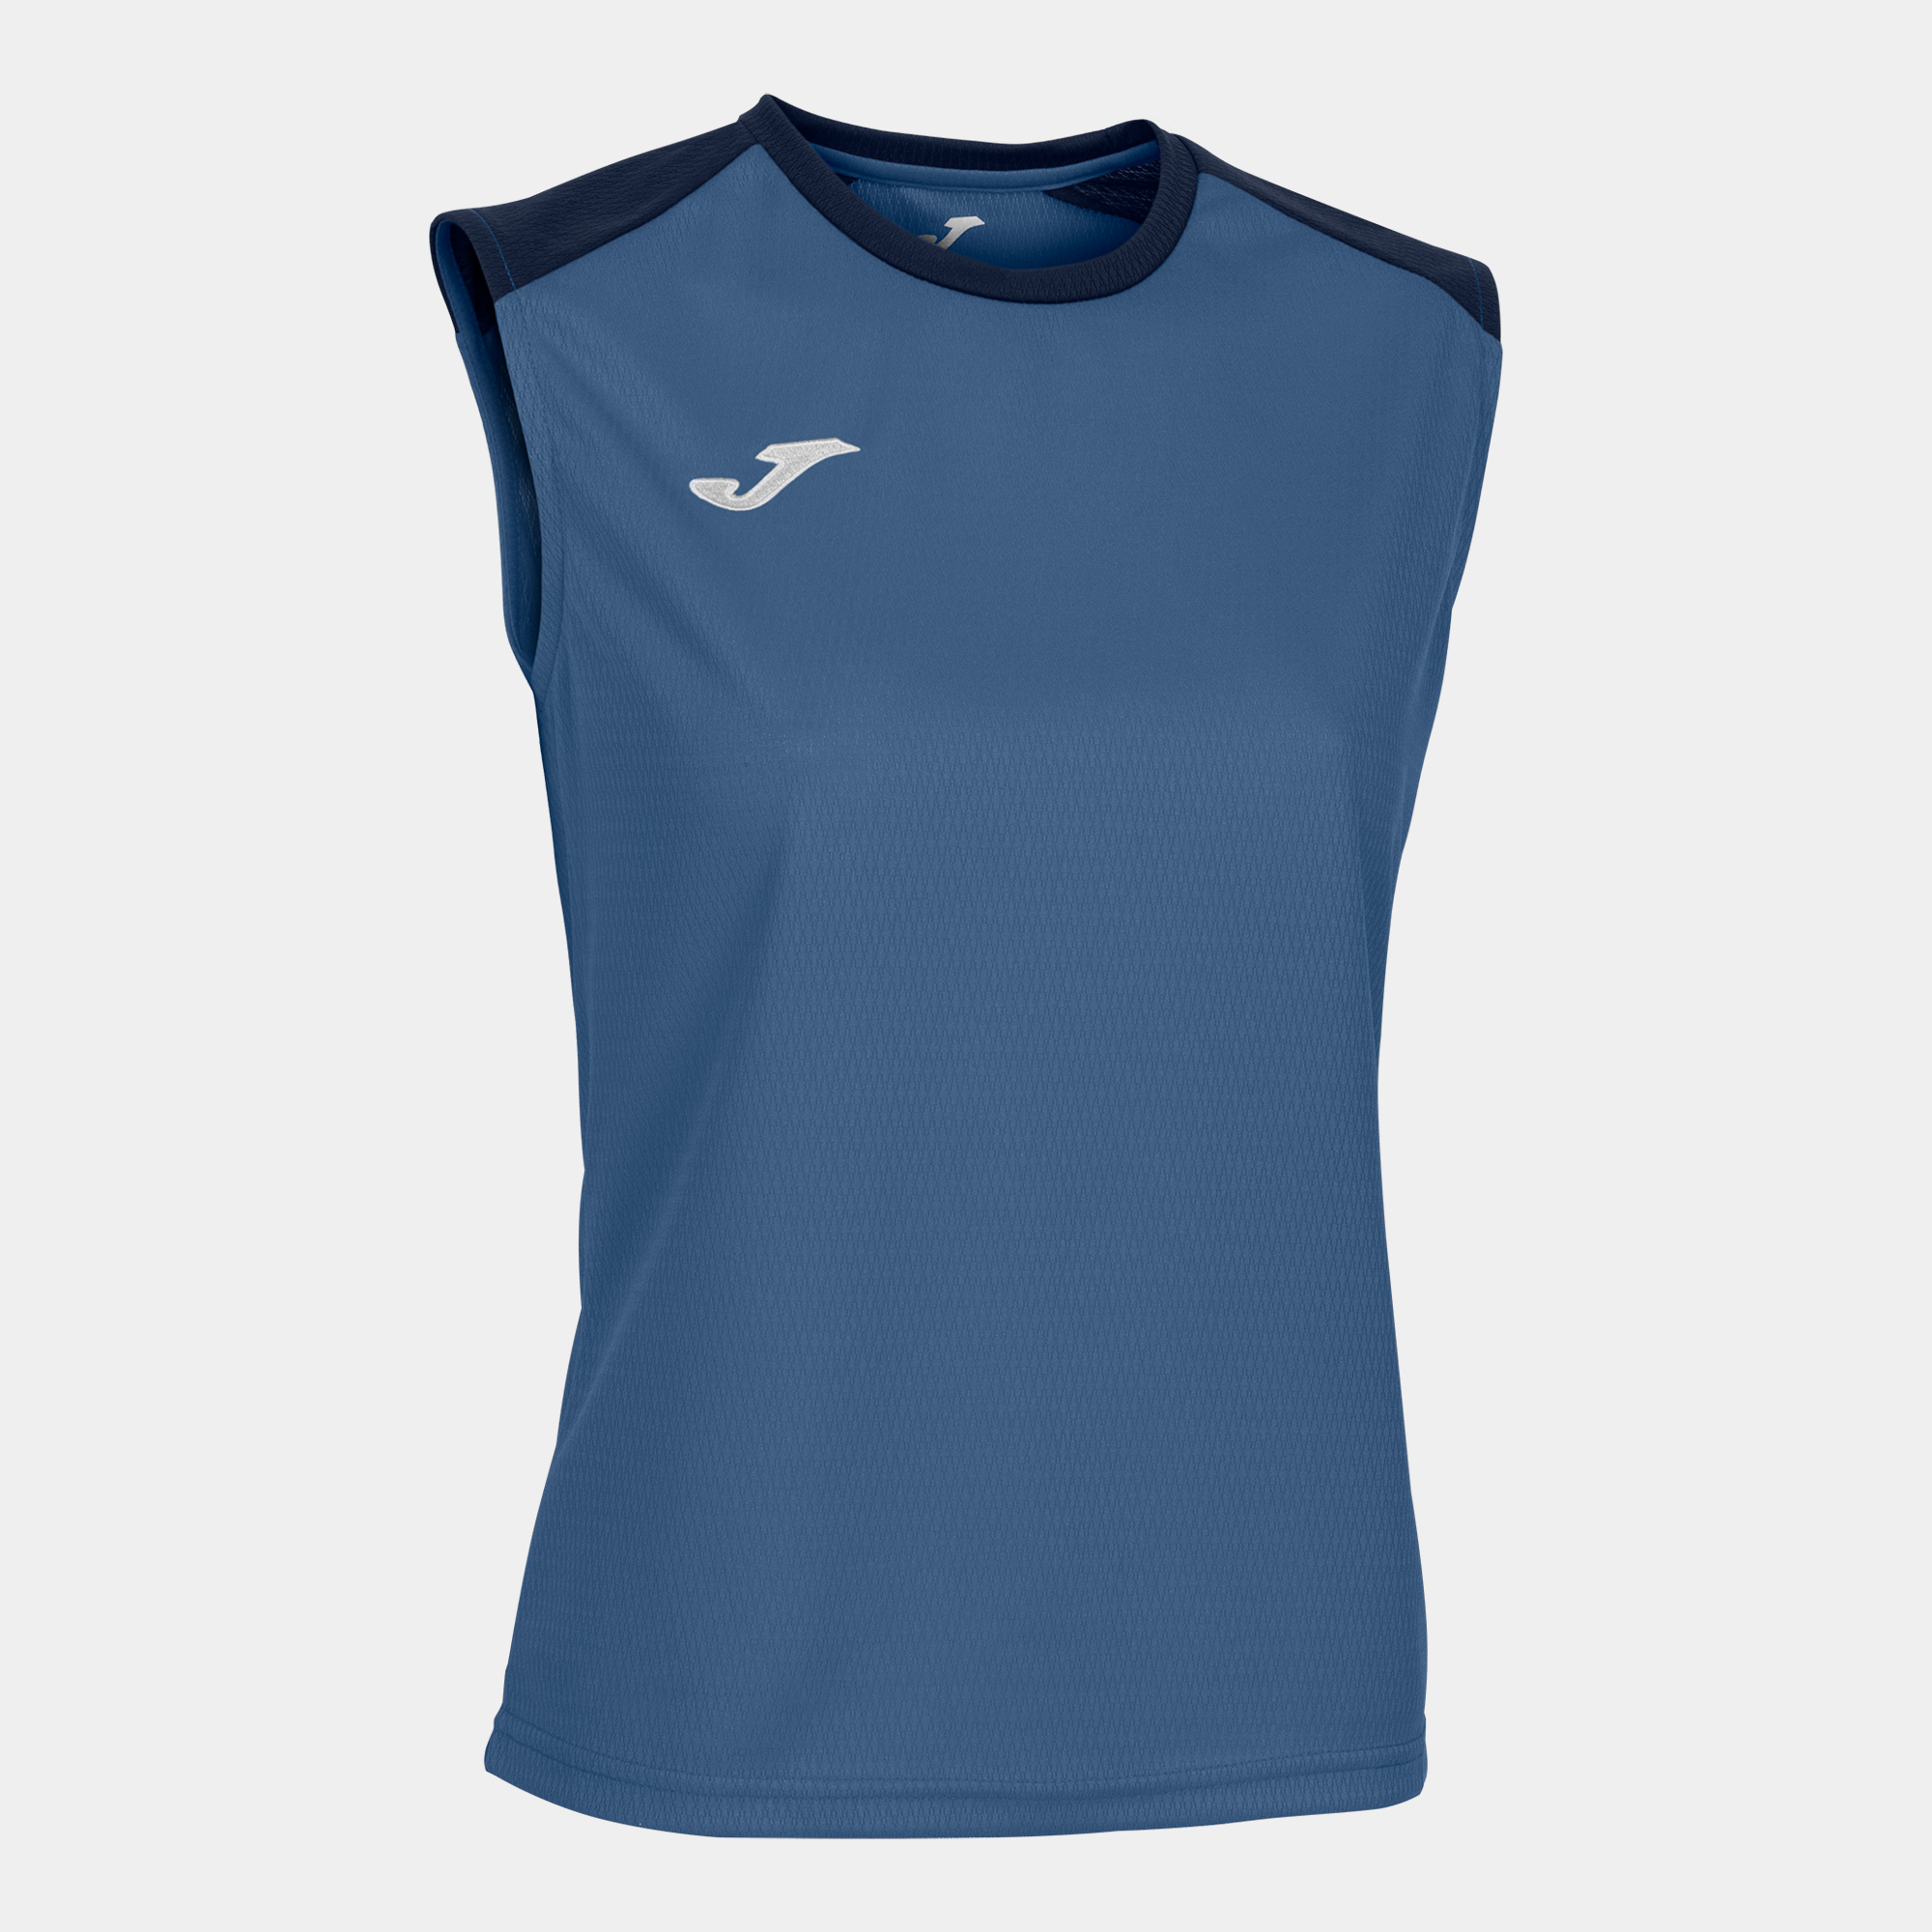 Camiseta Tirantes Joma Eco Championship Azul Marino - azul-marino - 